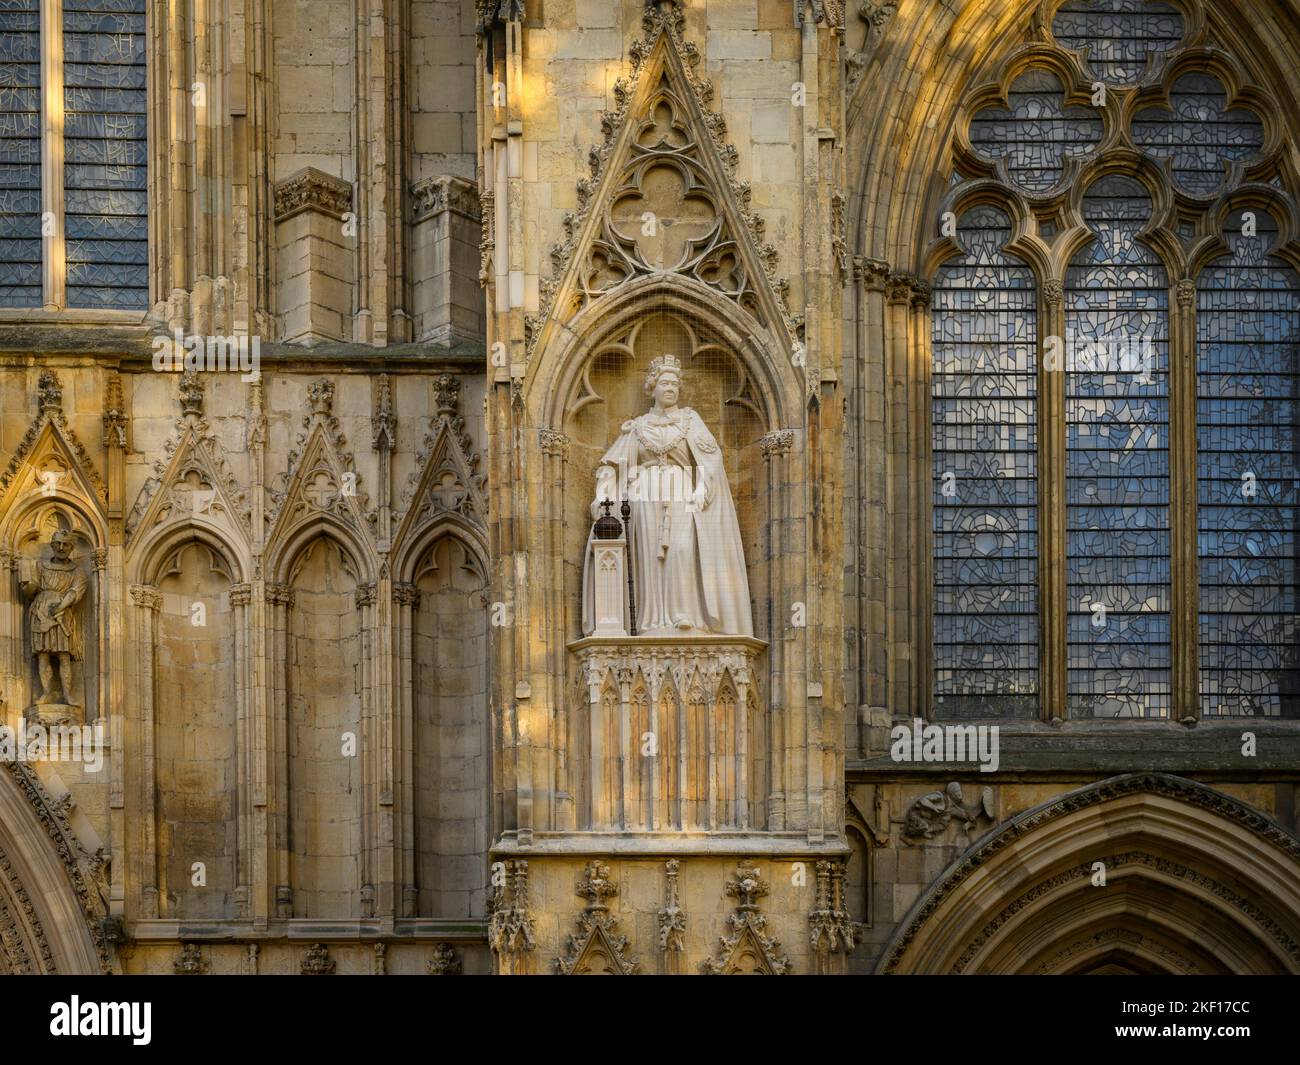 Elizabeth 2 limestone statue standing on high niche wearing ceremonial dress (orb & sceptre) - west front, York Minster, North Yorkshire, England UK. Stock Photo